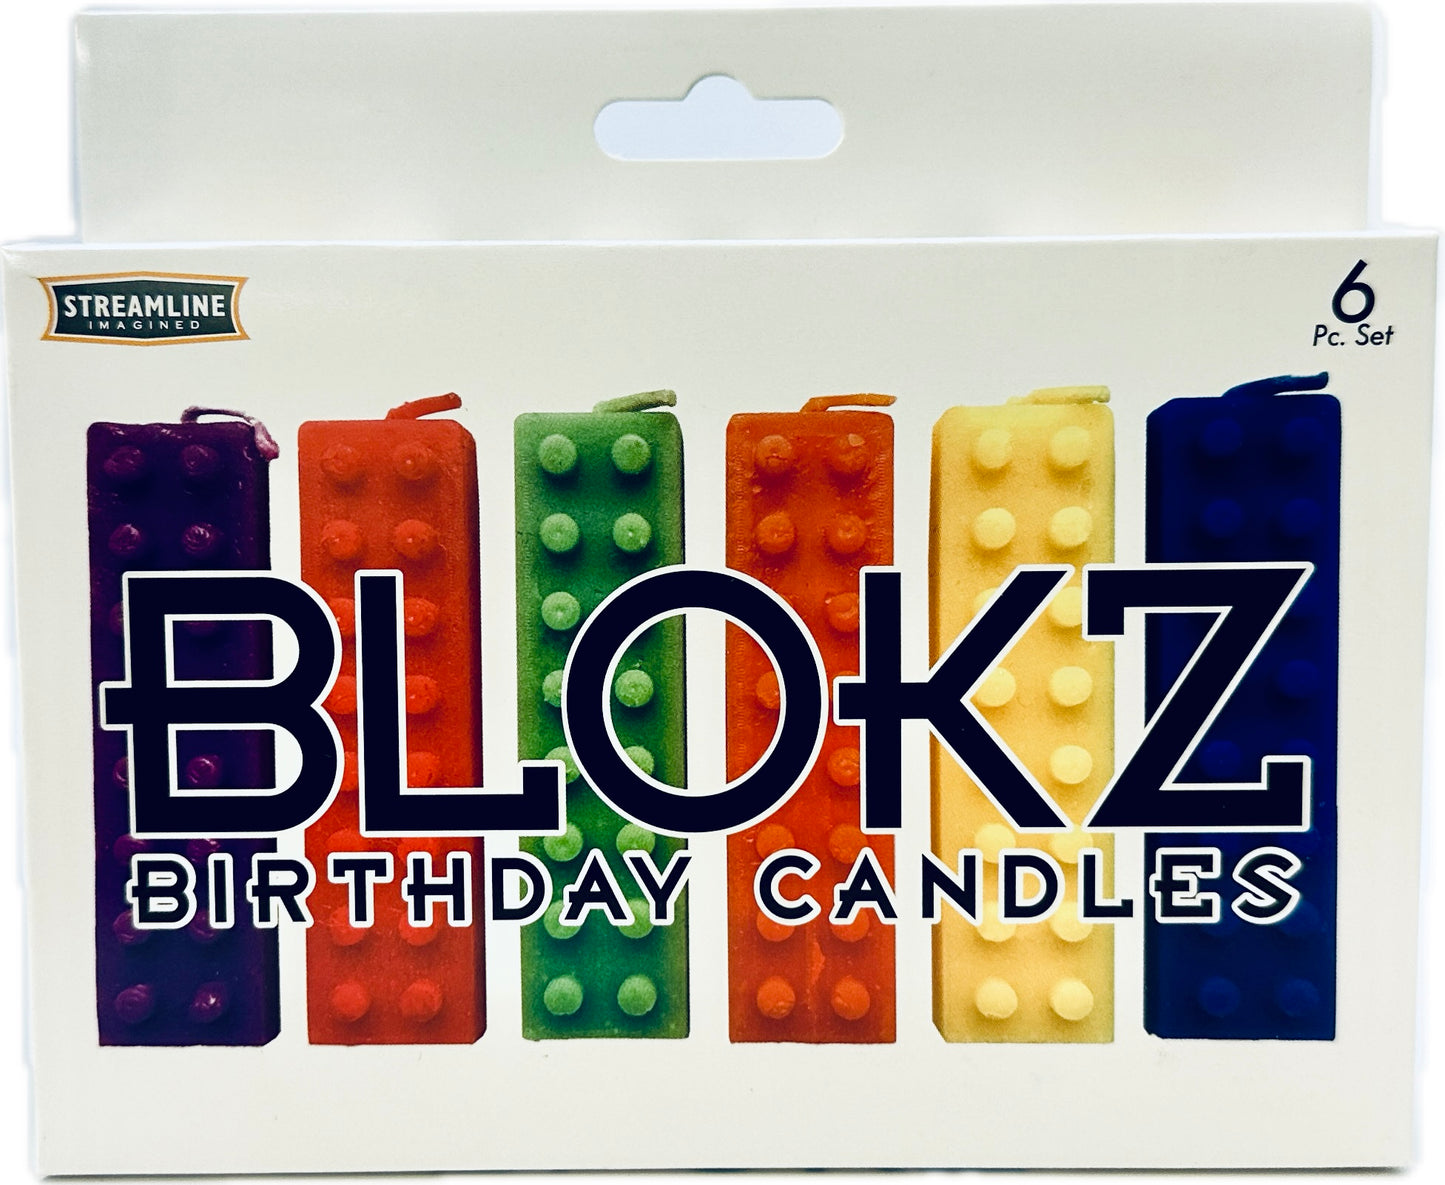 Blokz Candles 6 pc Set